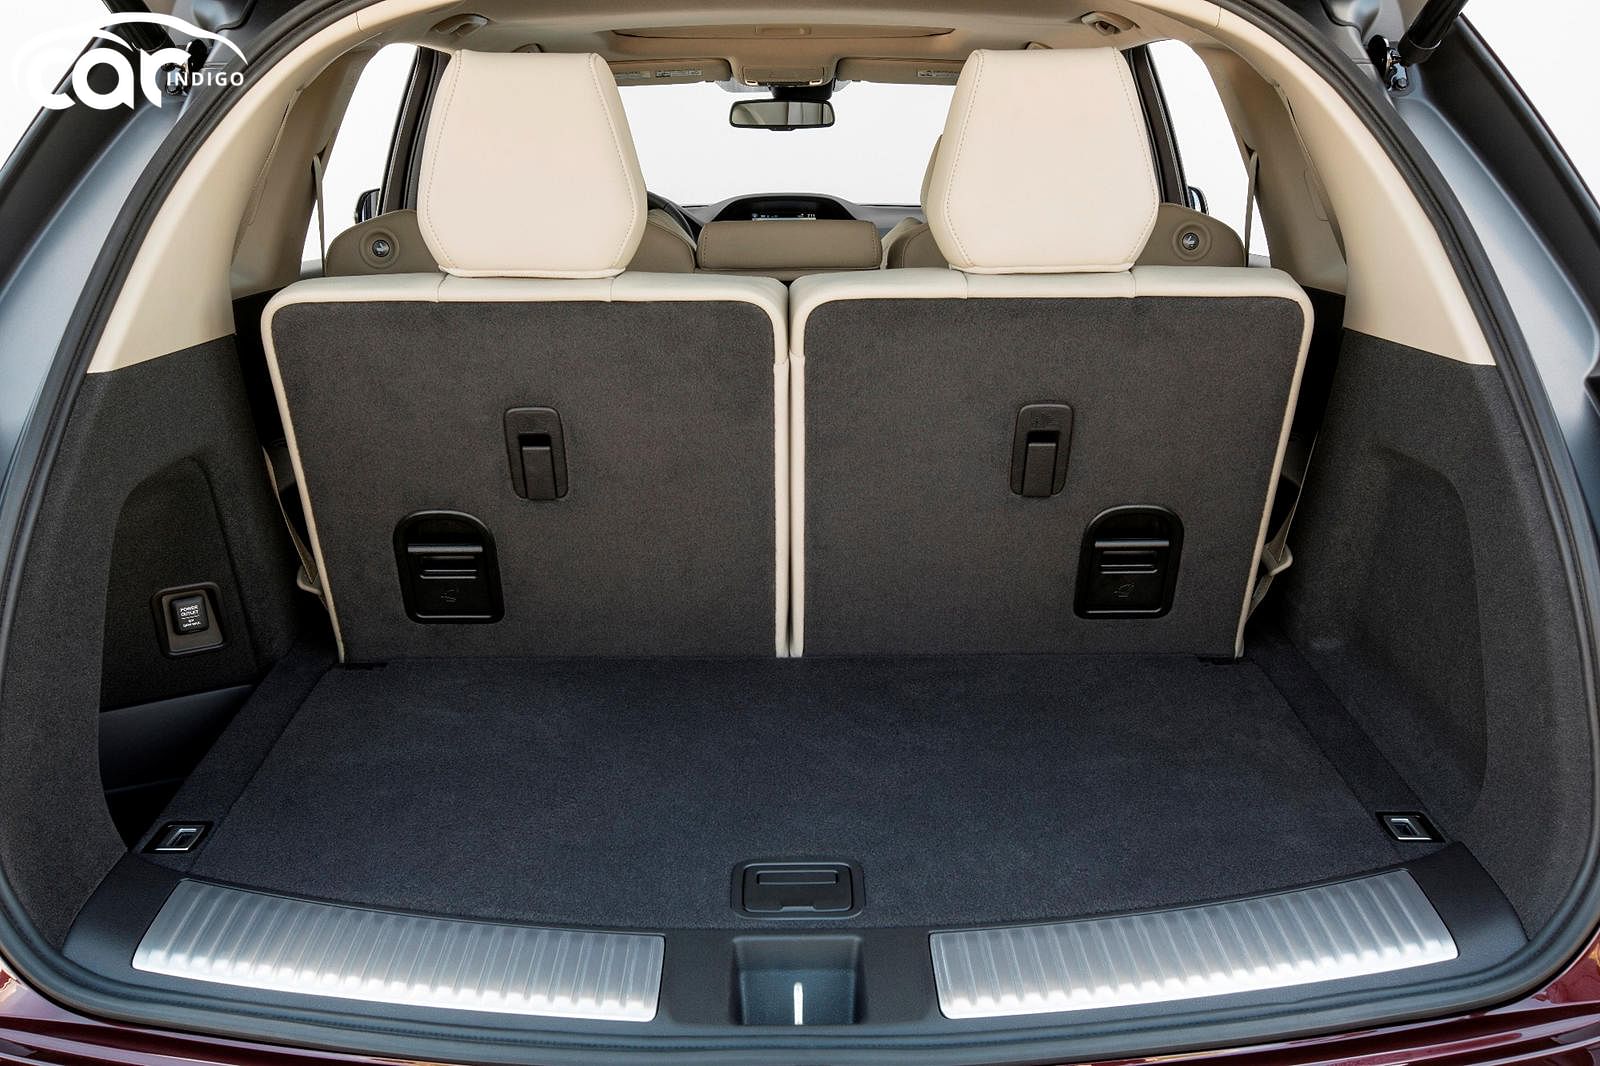 2016 Acura MDX Interior Review - Seating, Infotainment, Dashboard and  Features | CarIndigo.com